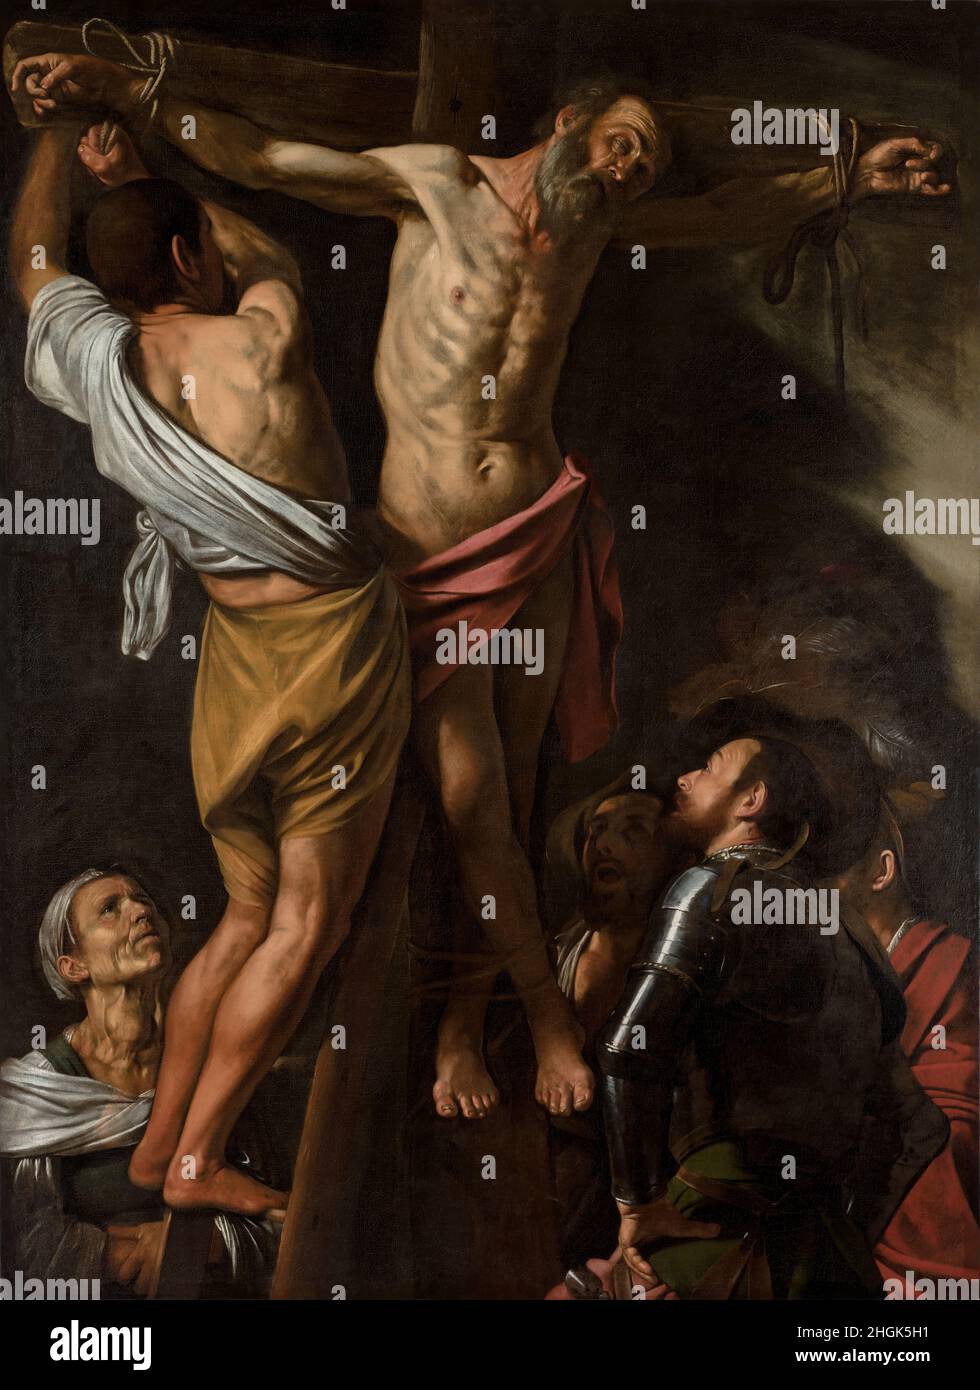 The Crucifixion of Saint Andrew - 1606 07 - oil on canvas 202.5 x 152.7 cm - Merisi Michelangelo - Caravaggio - Stock Photo